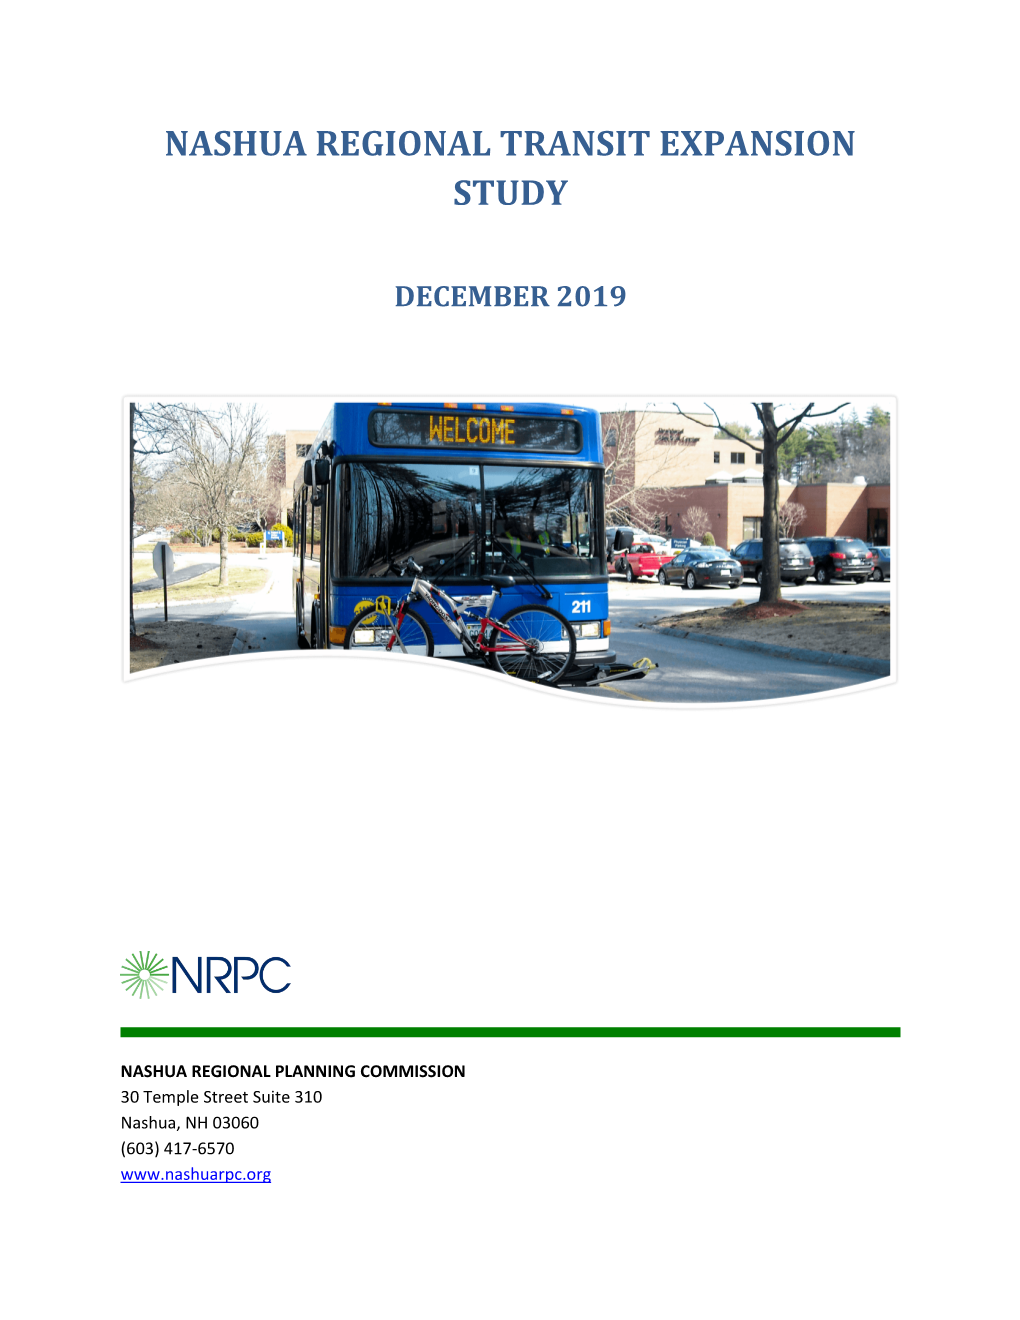 Nashua Regional Transit Expansion Study